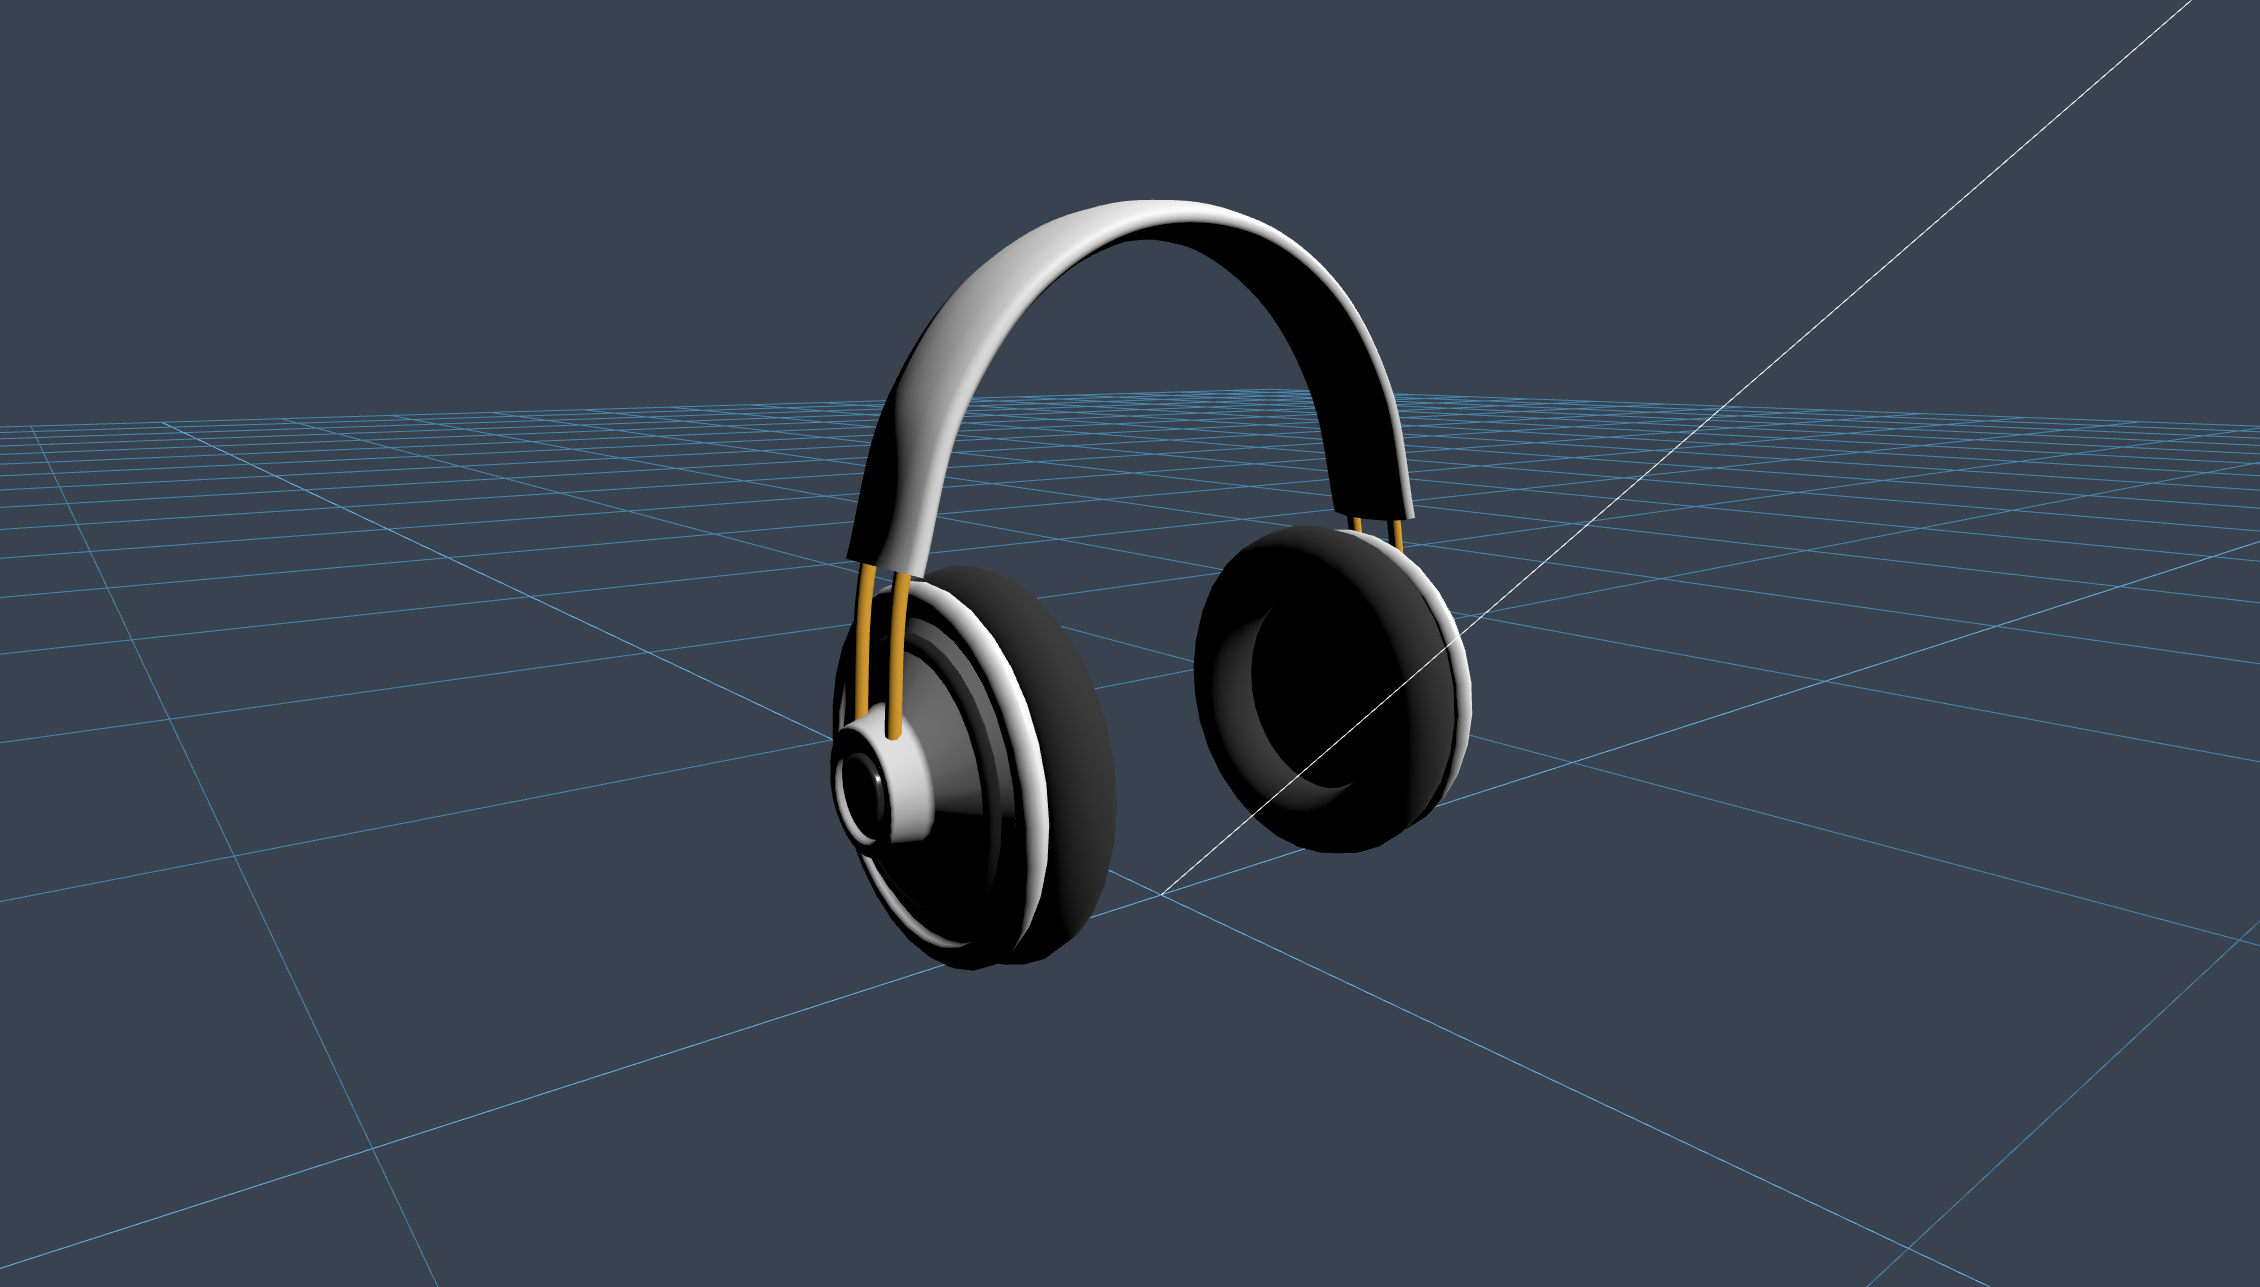 Headphones - nilikha ni Niilo Korppi gamit ang 3D